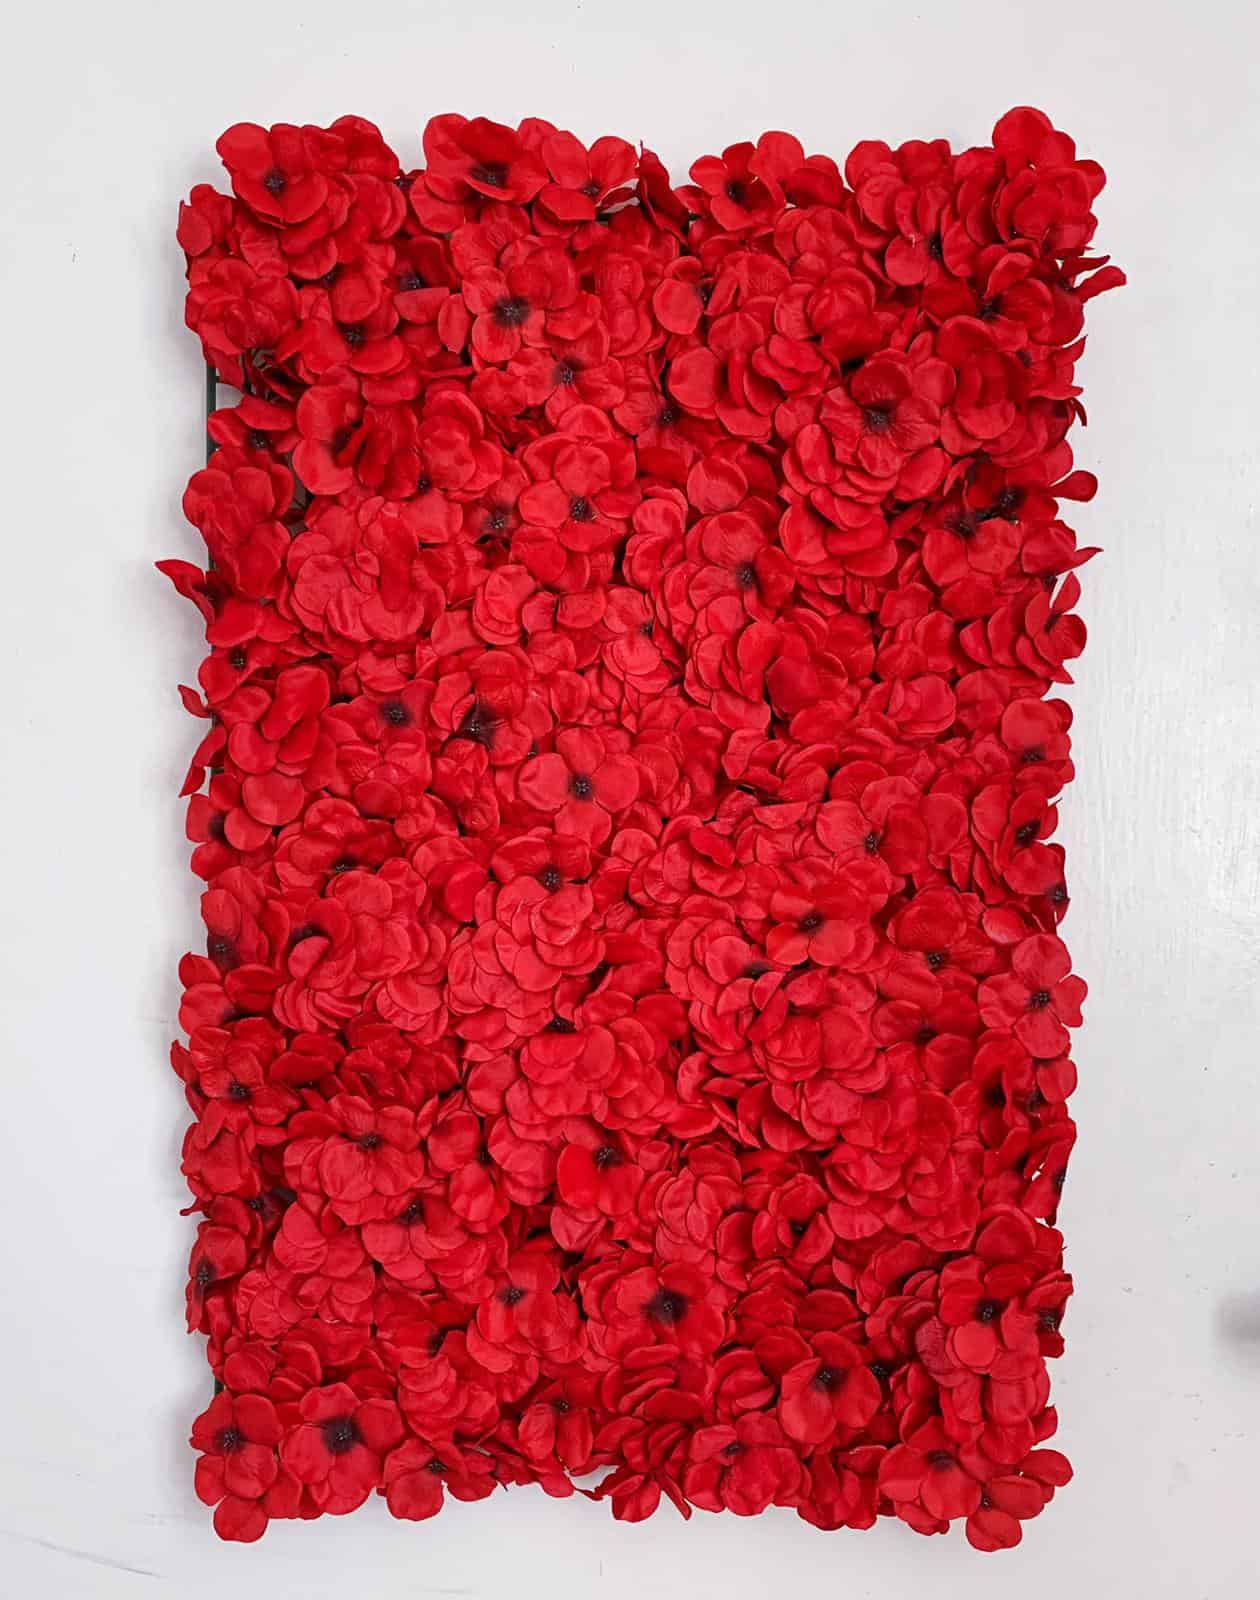 flower wall panel